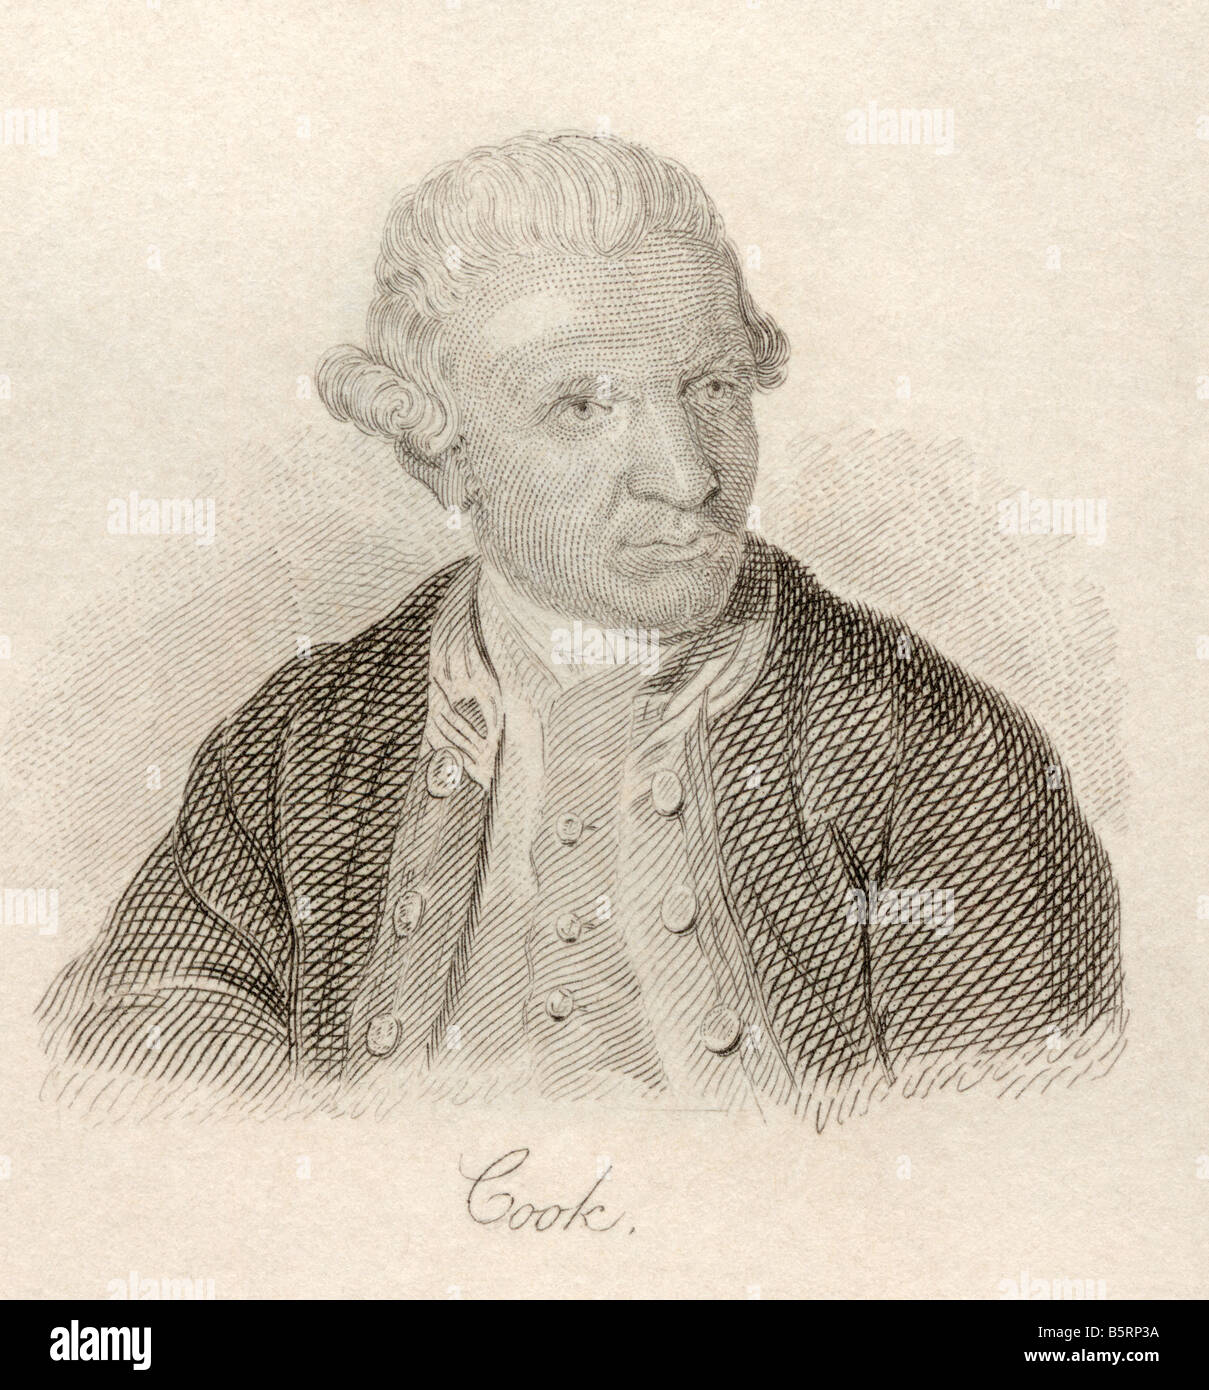 Captain James Cook, 1728 - 1779. British naval commander navigator and explorer. Stock Photo